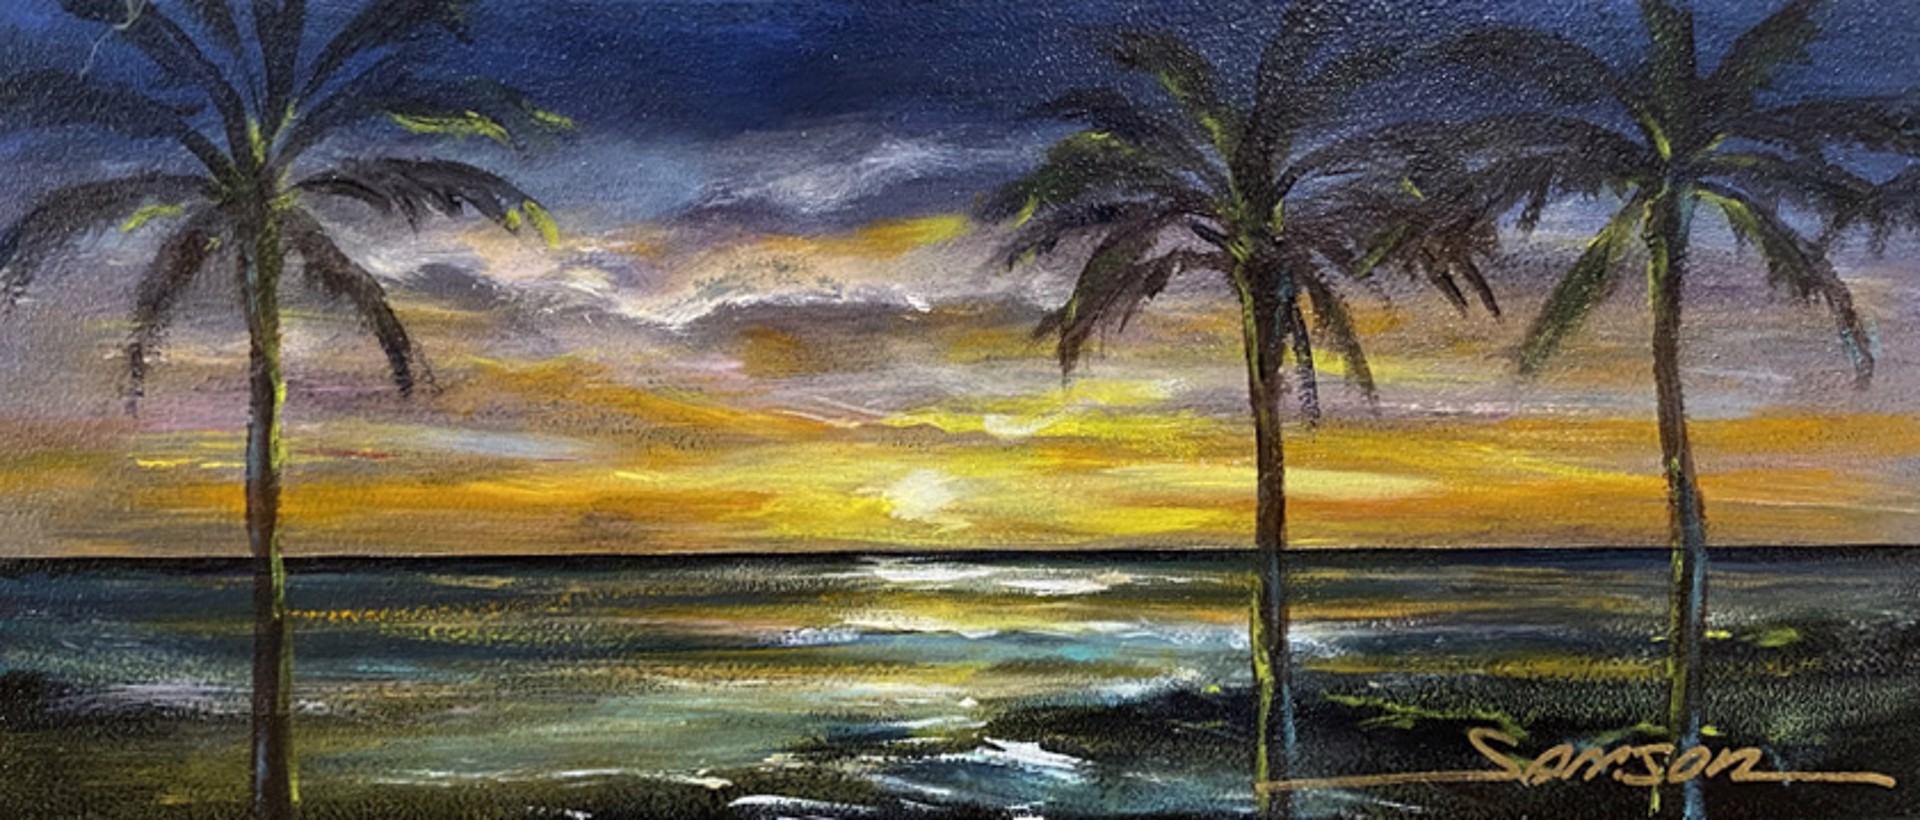 Twilight Tropics by Lee Samson